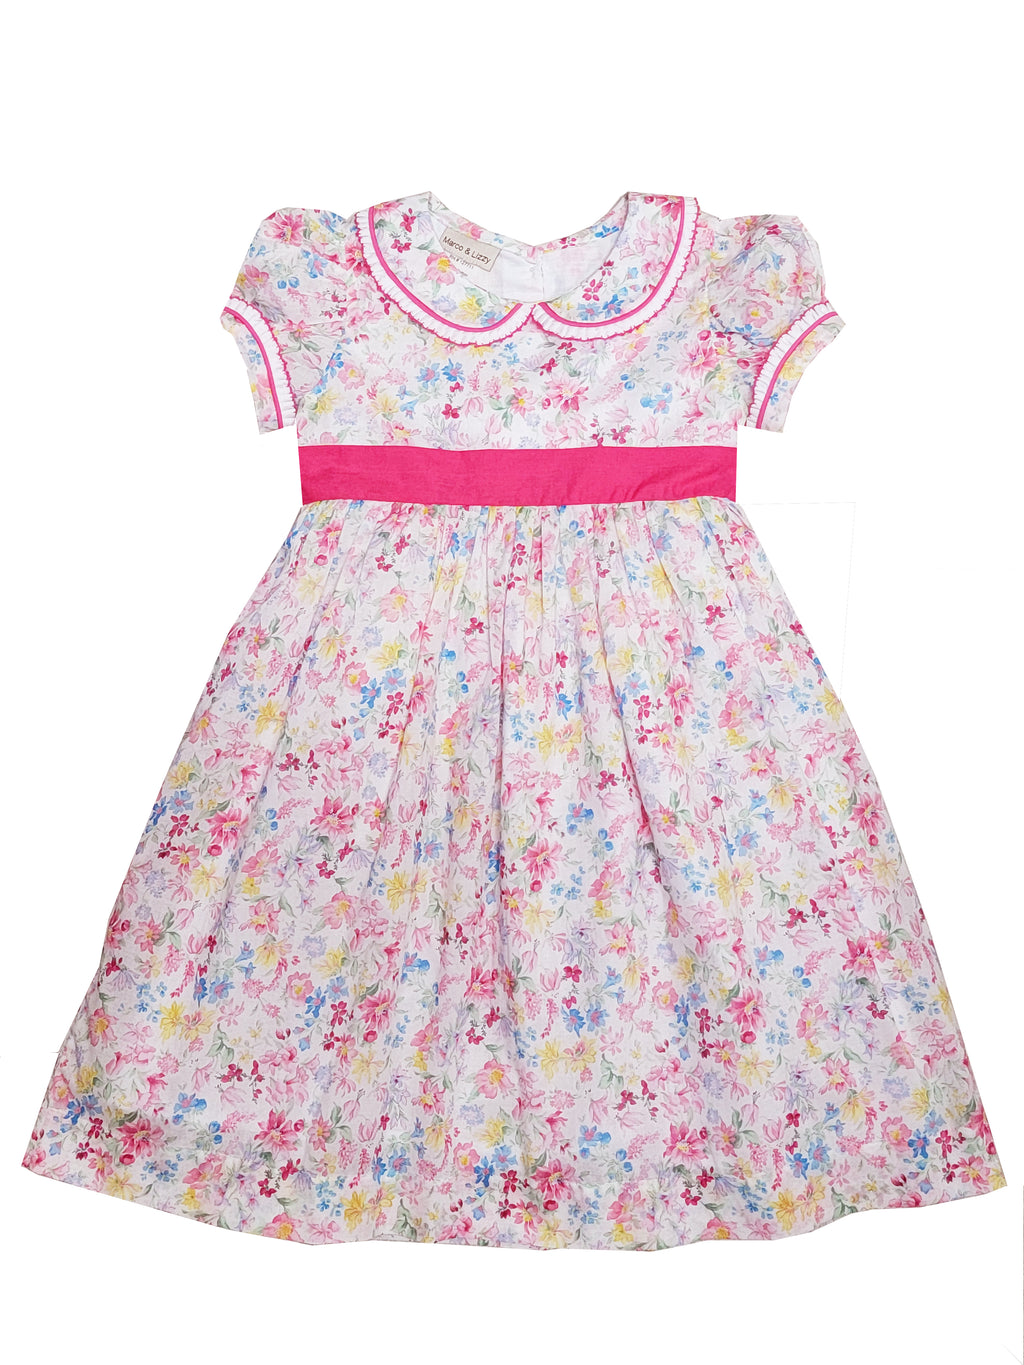 Girl's Floral Dress - Little Threads Inc. Children's Clothing